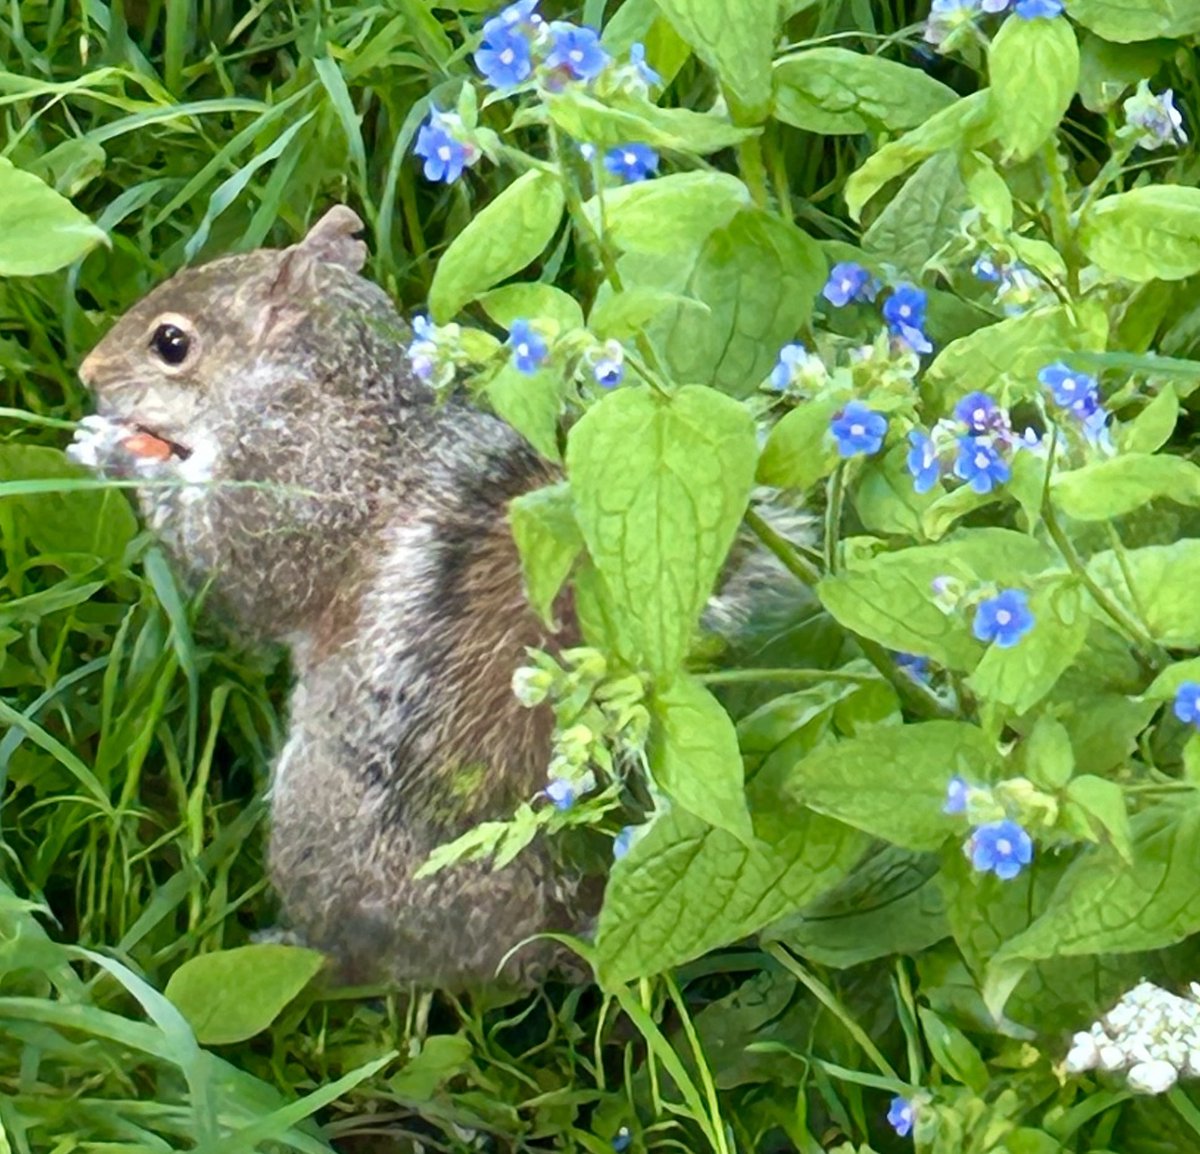 New Mama Reg having a break among the flowers. #SquirrelScrolling